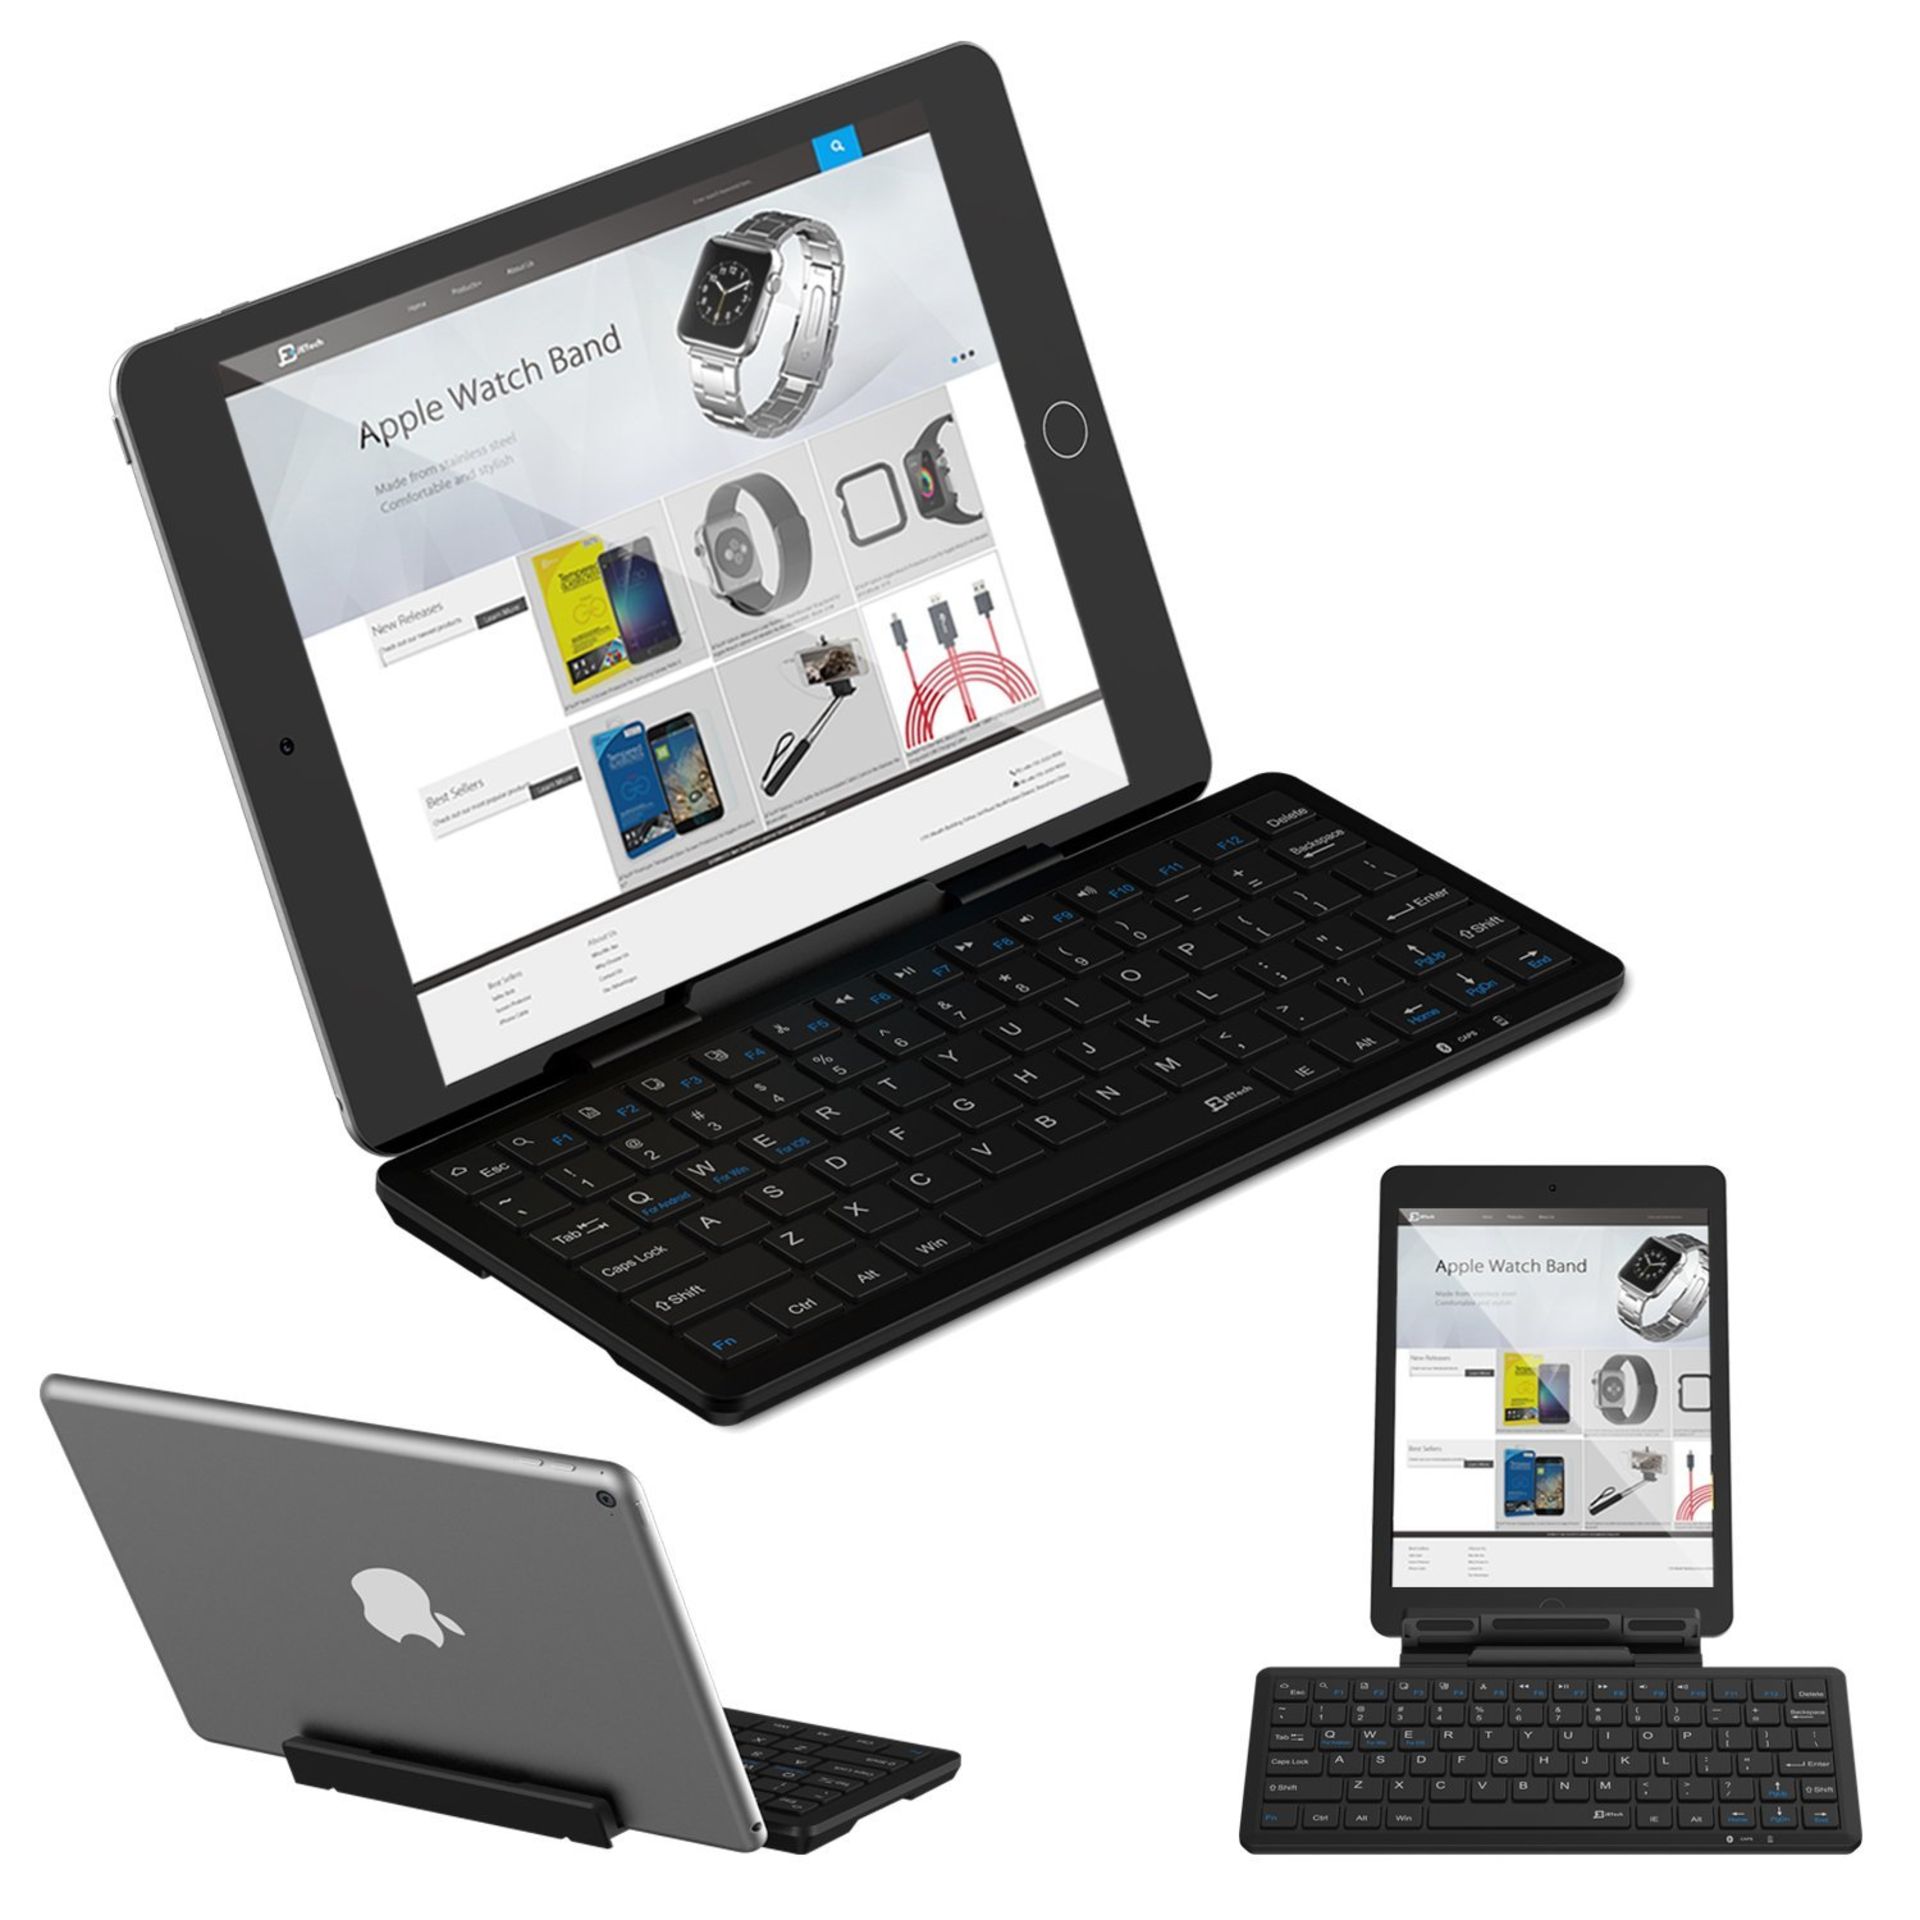 V *TRADE QTY* Brand New Tragbare Universal Bluetooth Keyboard Amazon Price £14.95 X 4 YOUR BID PRICE